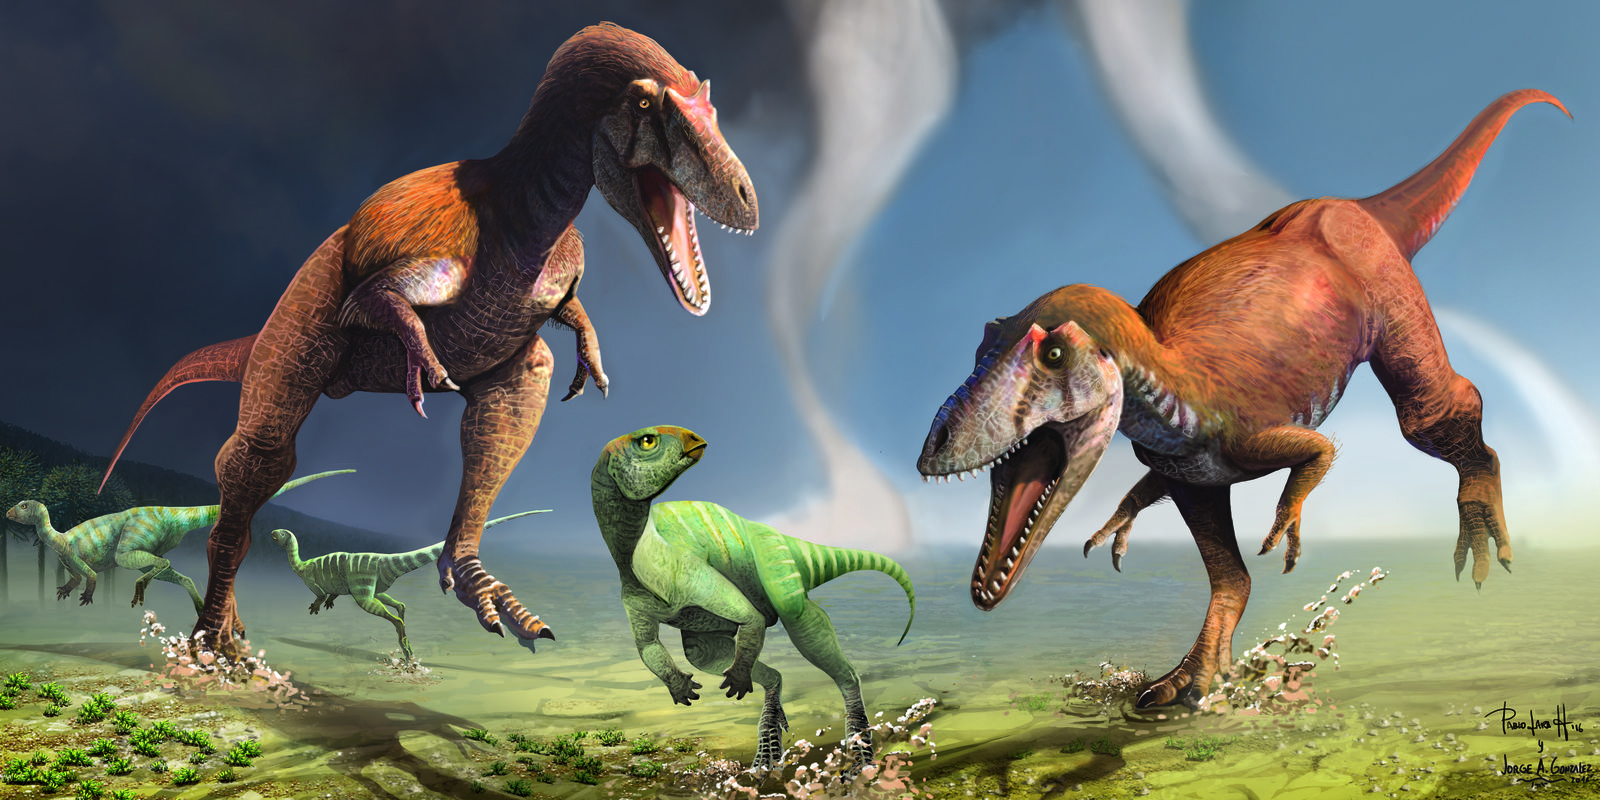 Illustration of two large orange dinosaurs attacking a smaller green dinosaur